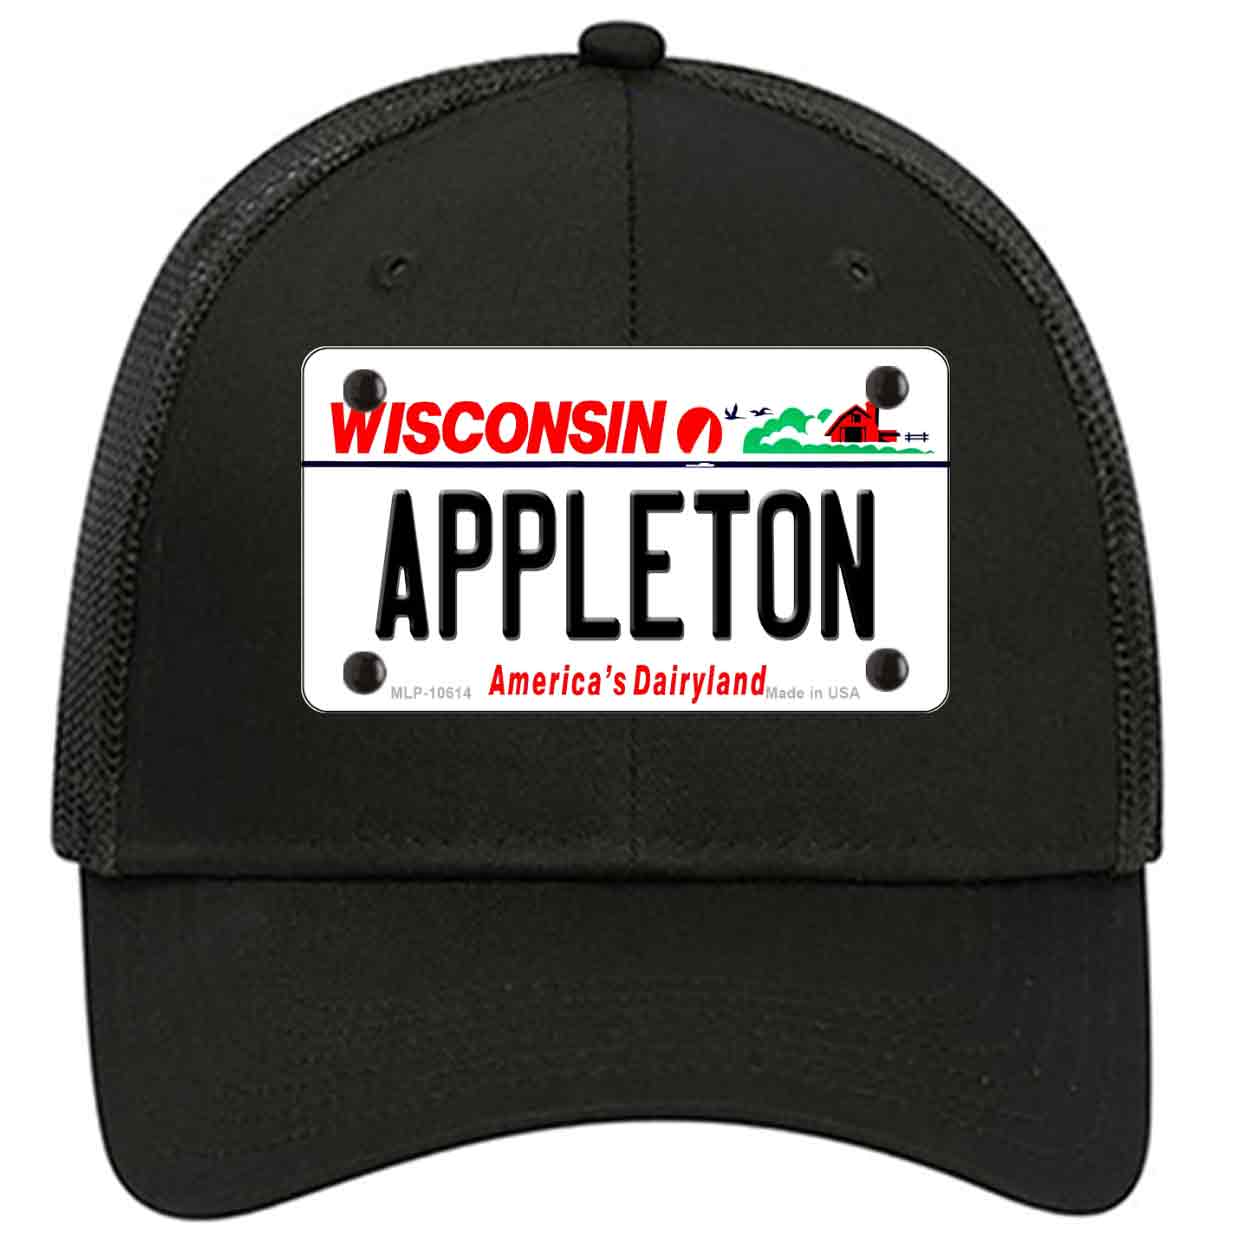 Appleton Wisconsin Novelty Black Mesh License Plate Hat